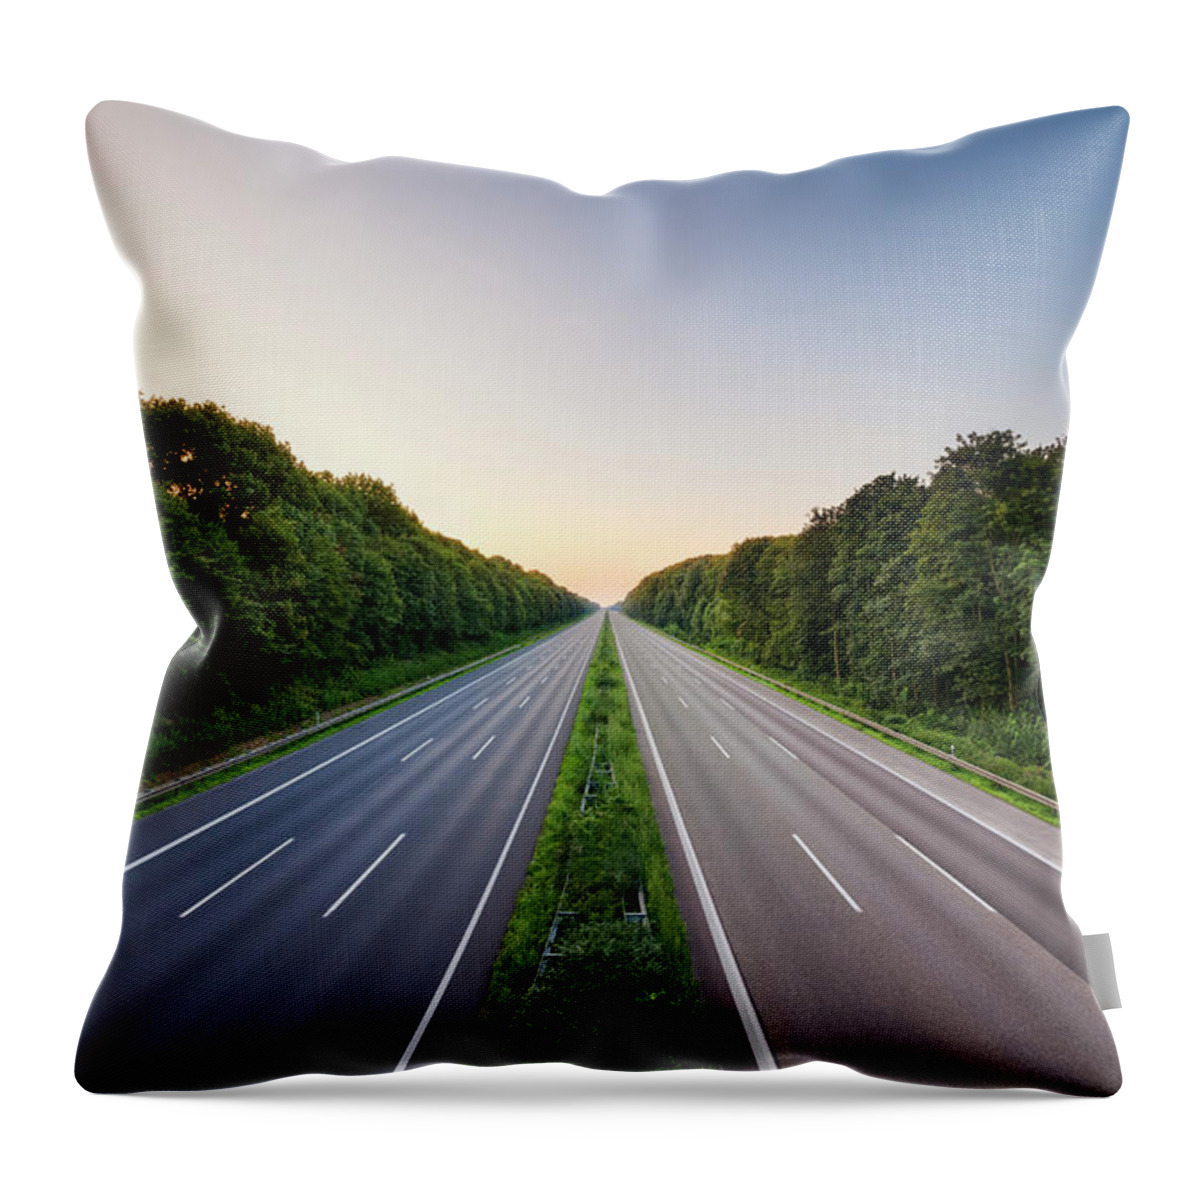 Autobahn Throw Pillow featuring the photograph Autobahn by Jorg Greuel